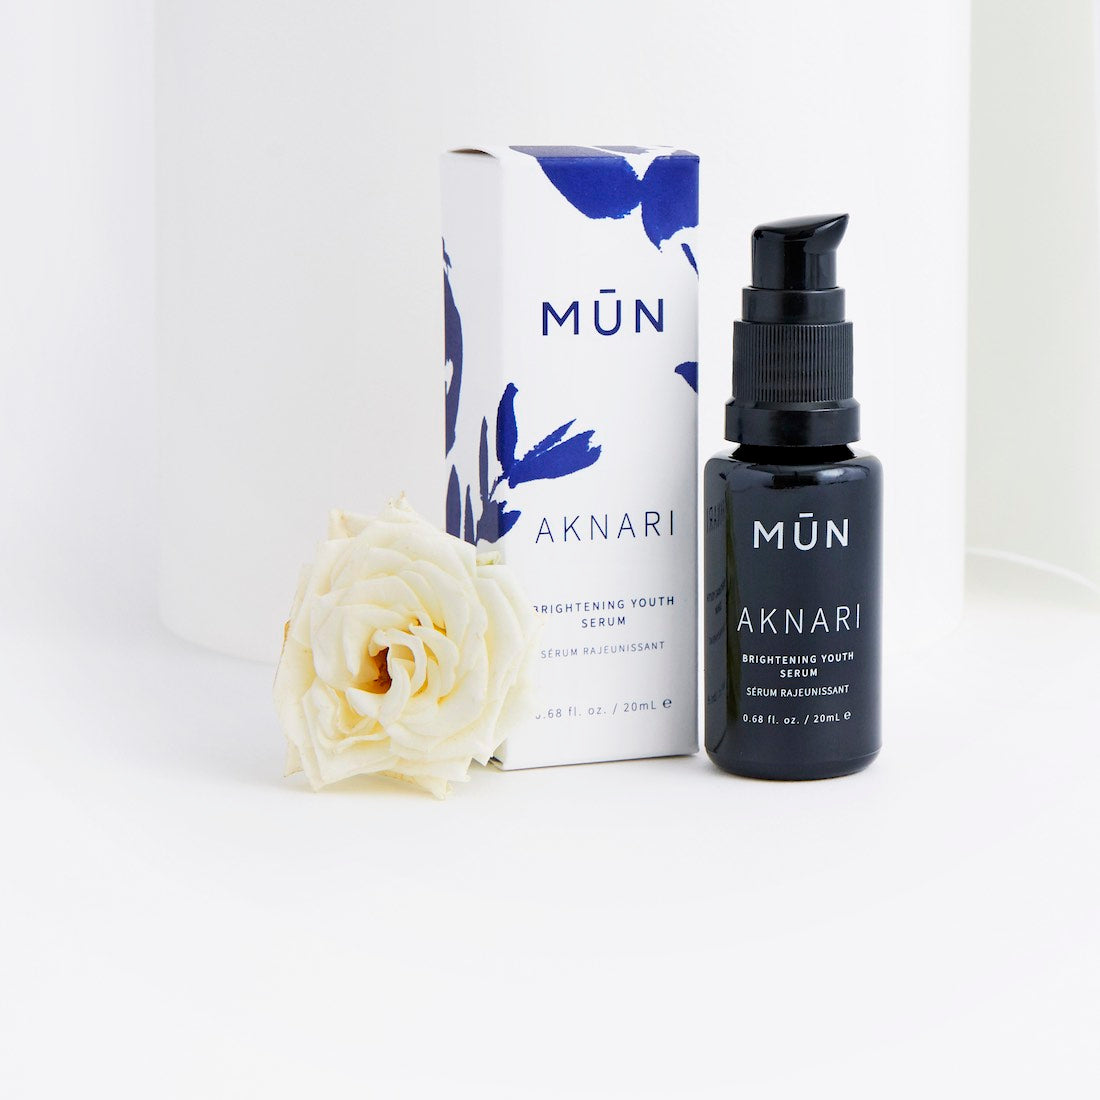 MUN Aknari Brightening Youth Serum Packaging - Natural & Organic Skin Care